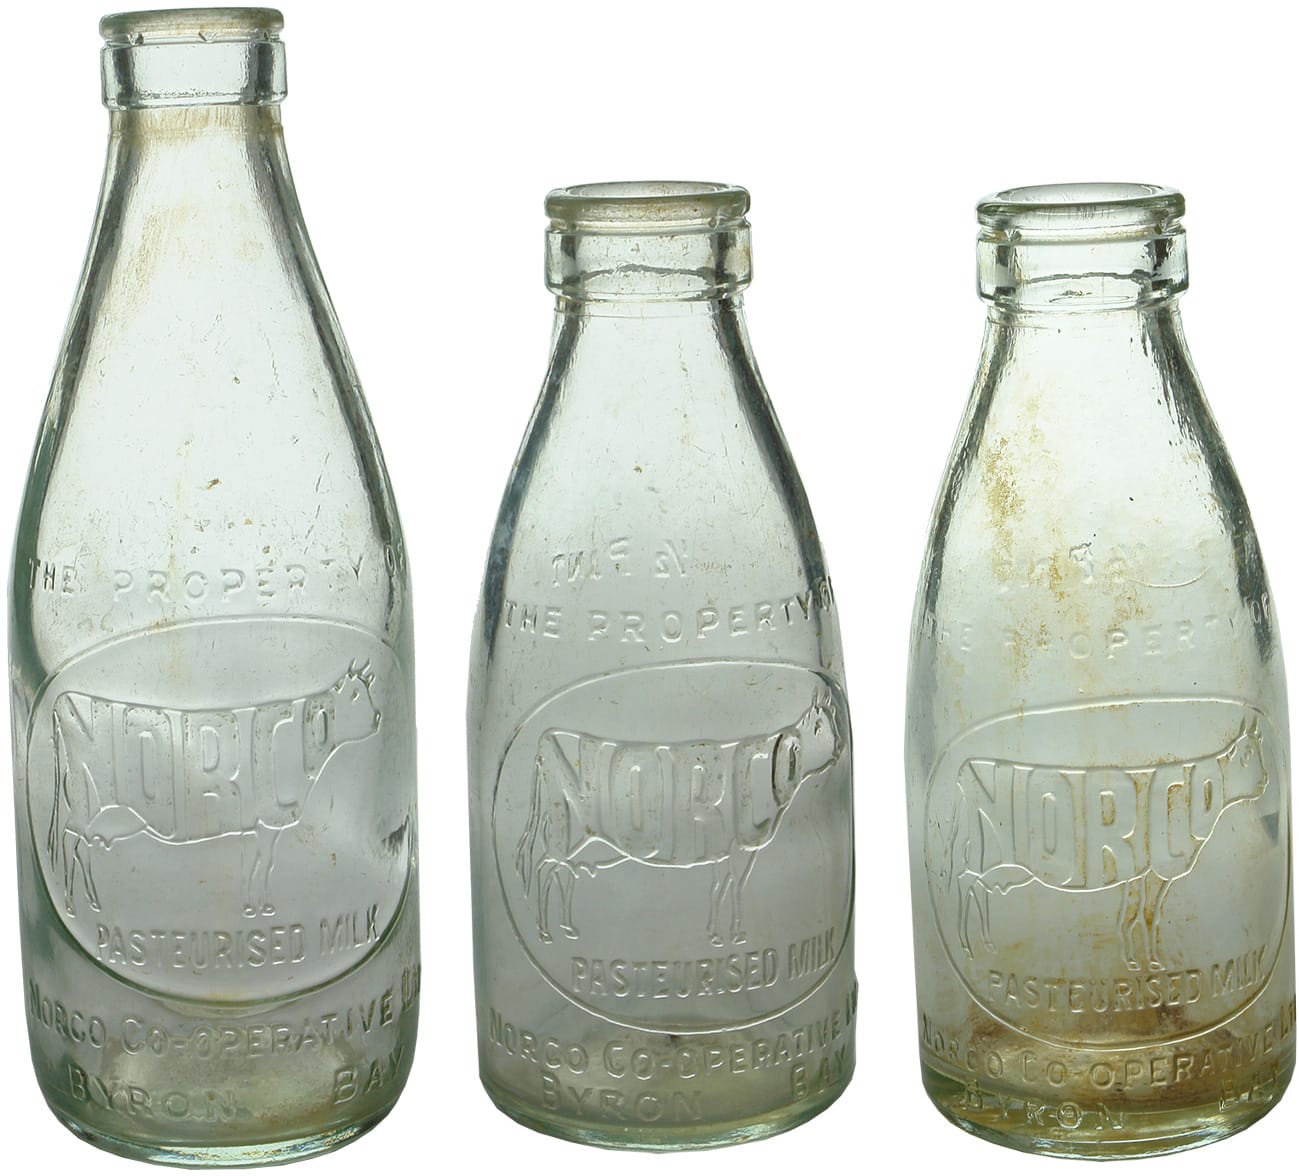 Norco Byron Bay Vintage Milk Bottles